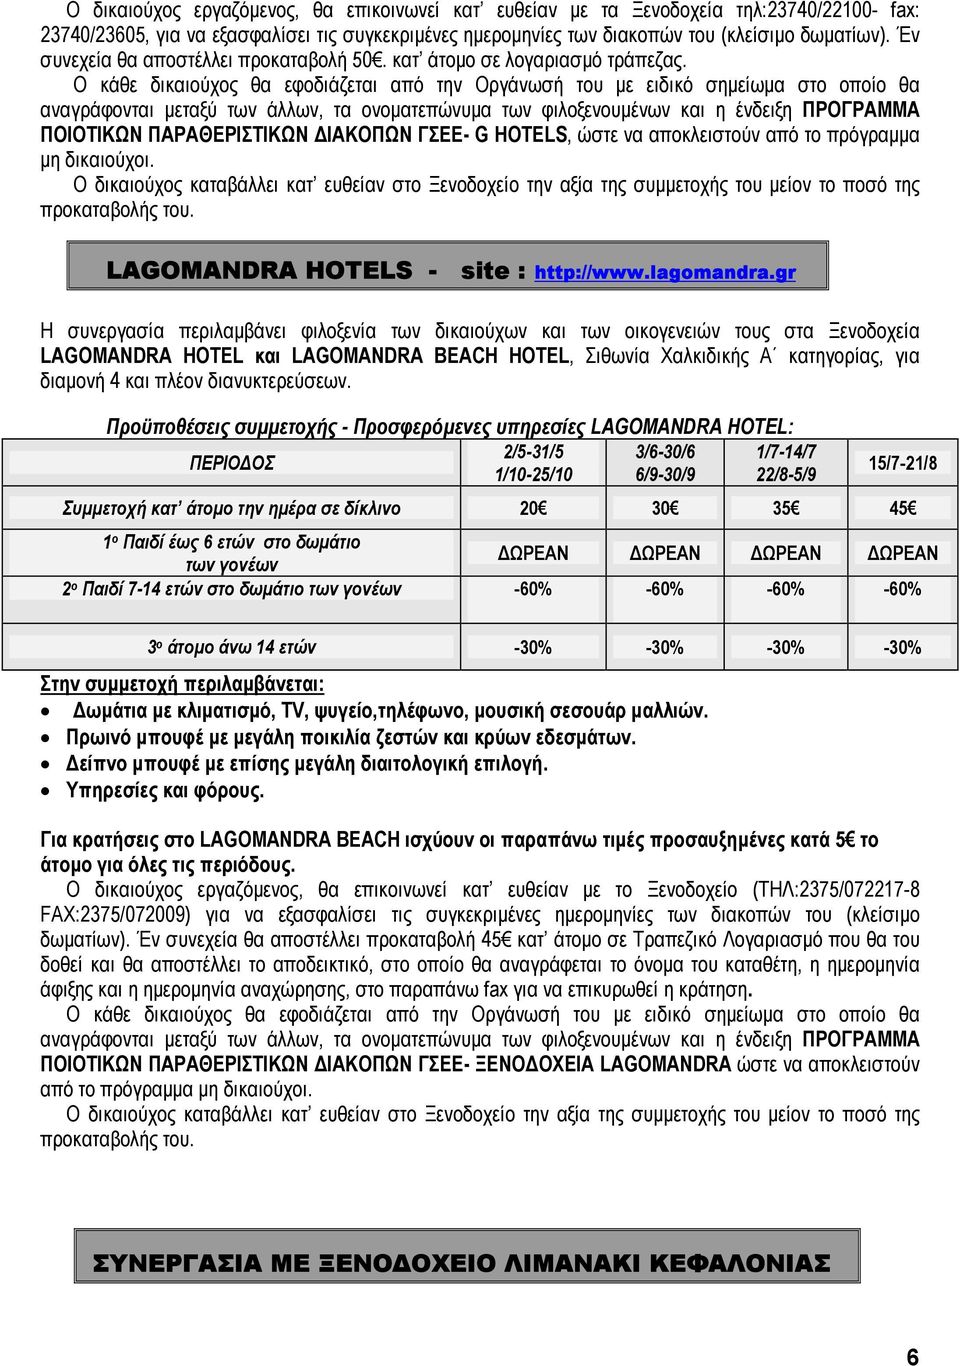 LAGOMANDRA HOTELS - site : http://www.lagomandra.